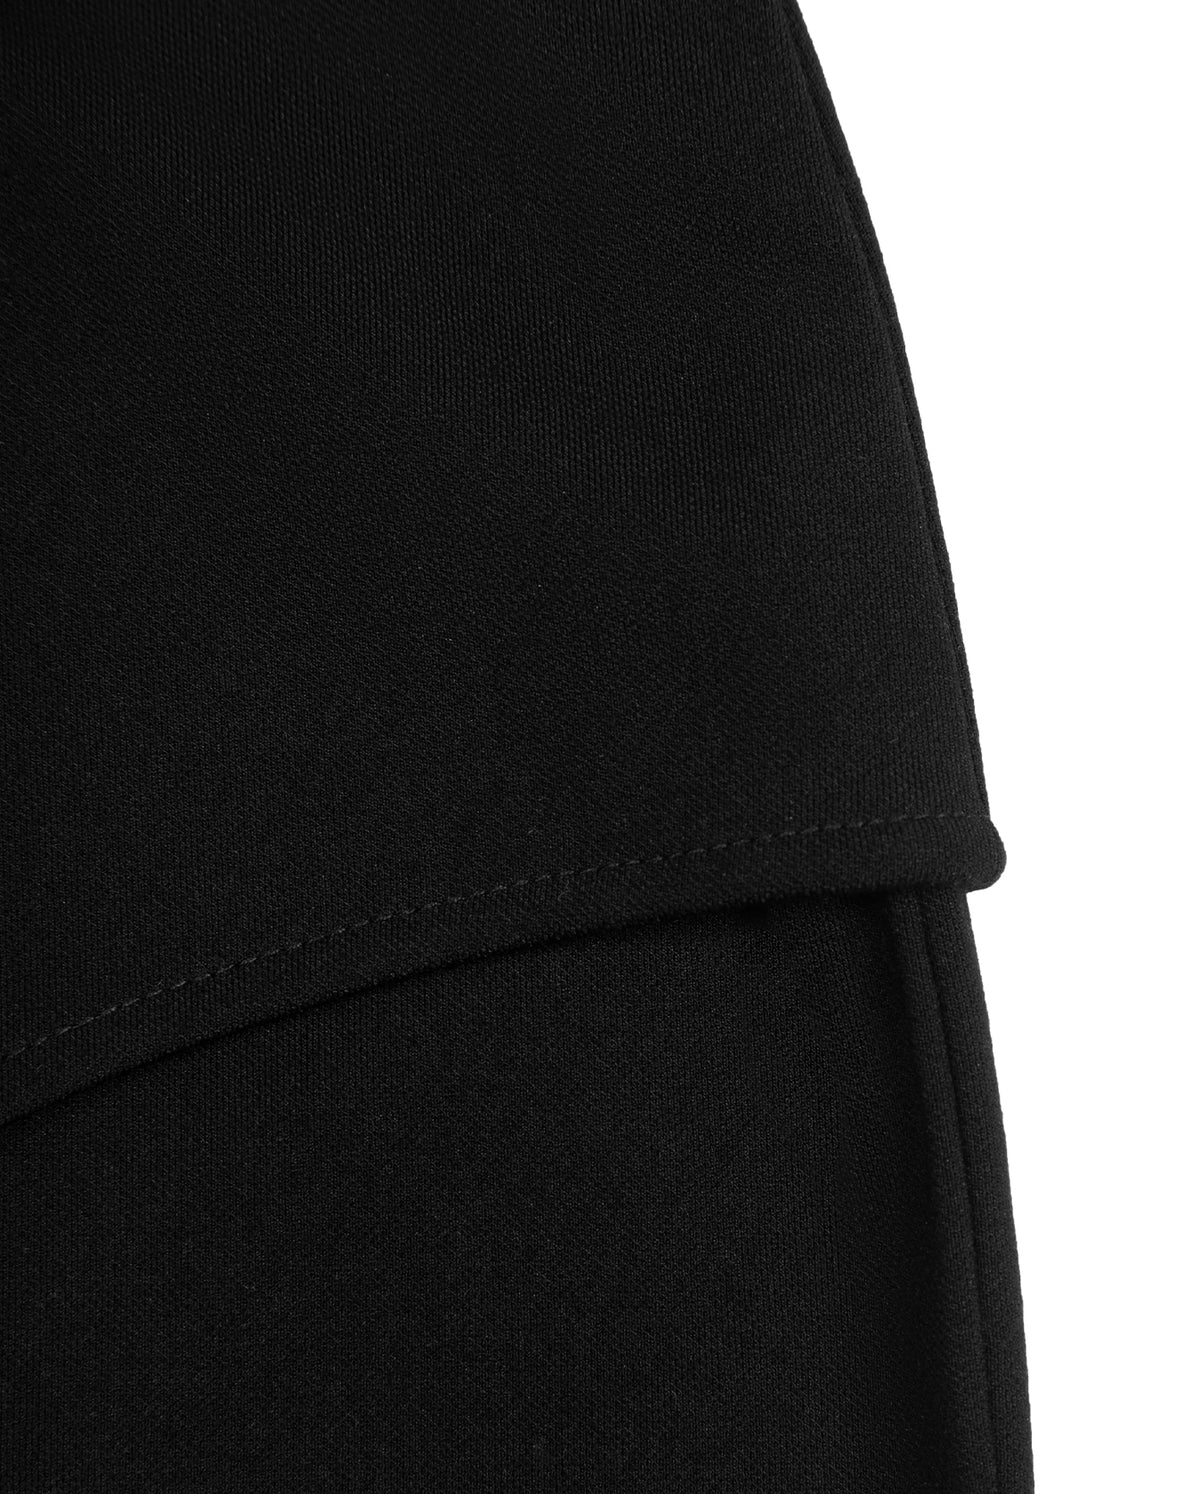 Streamline Layering Skirt